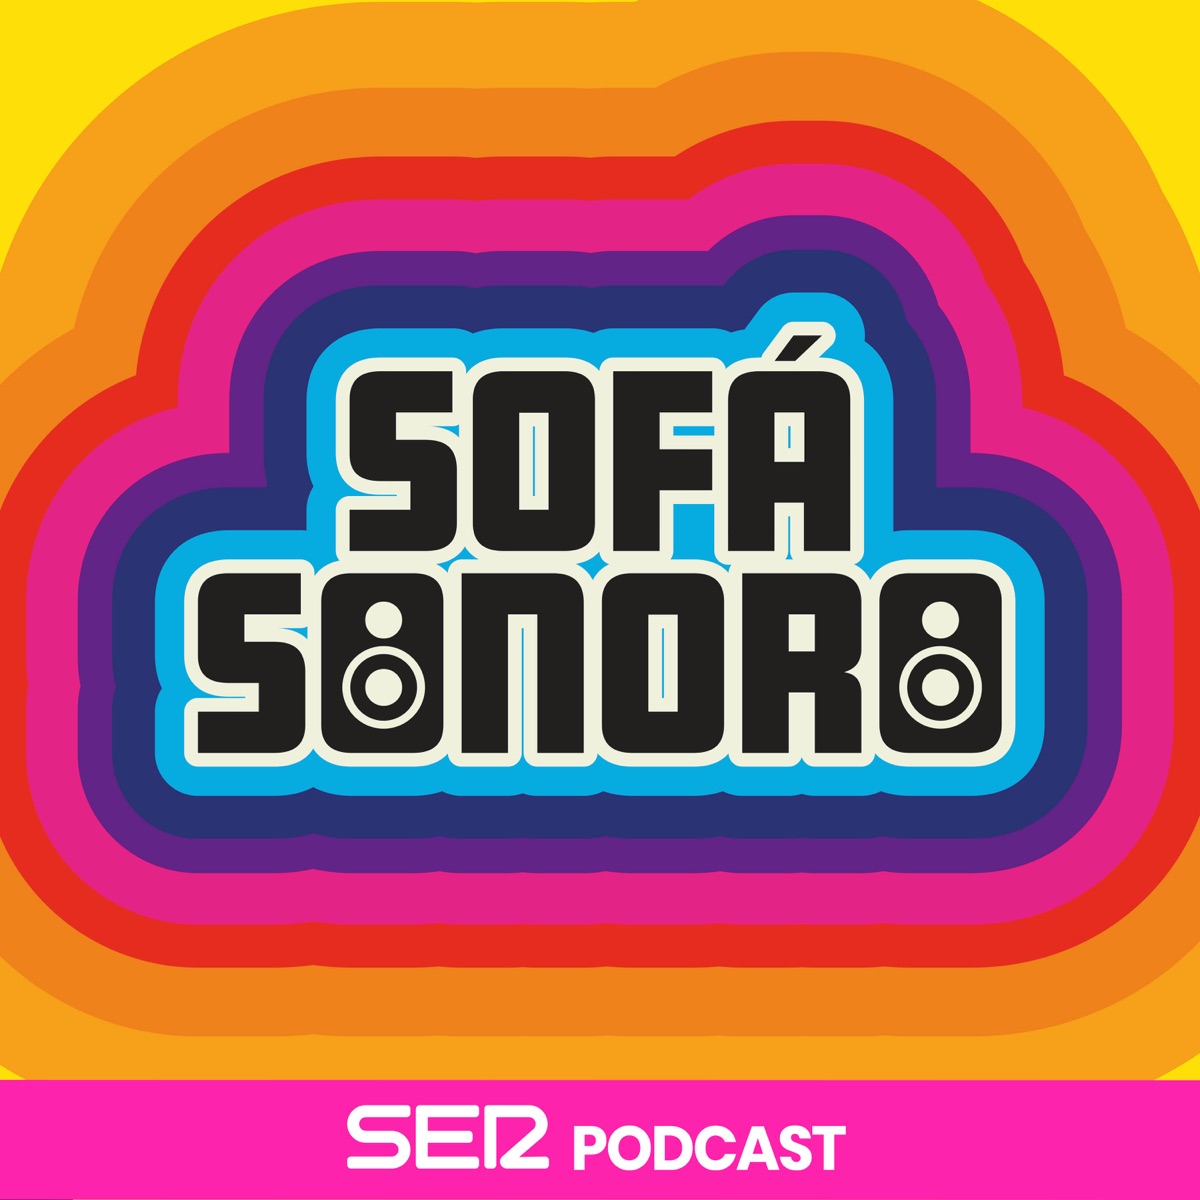 Details 26 sofá sonoro temporada 1